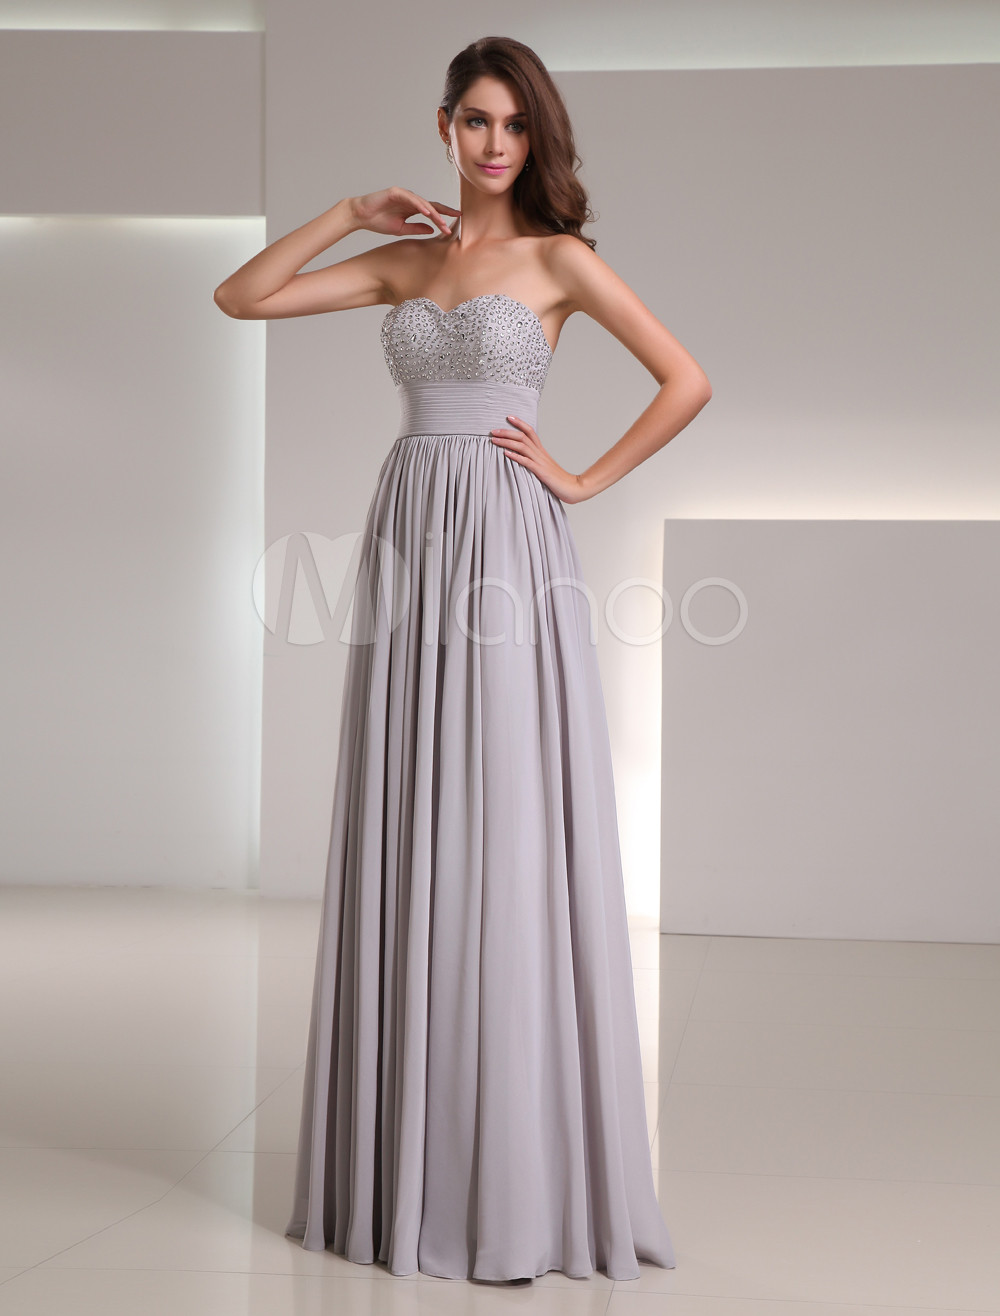 Chiffon Sequin Sweetheart Neck Evening Dress - Milanoo.com